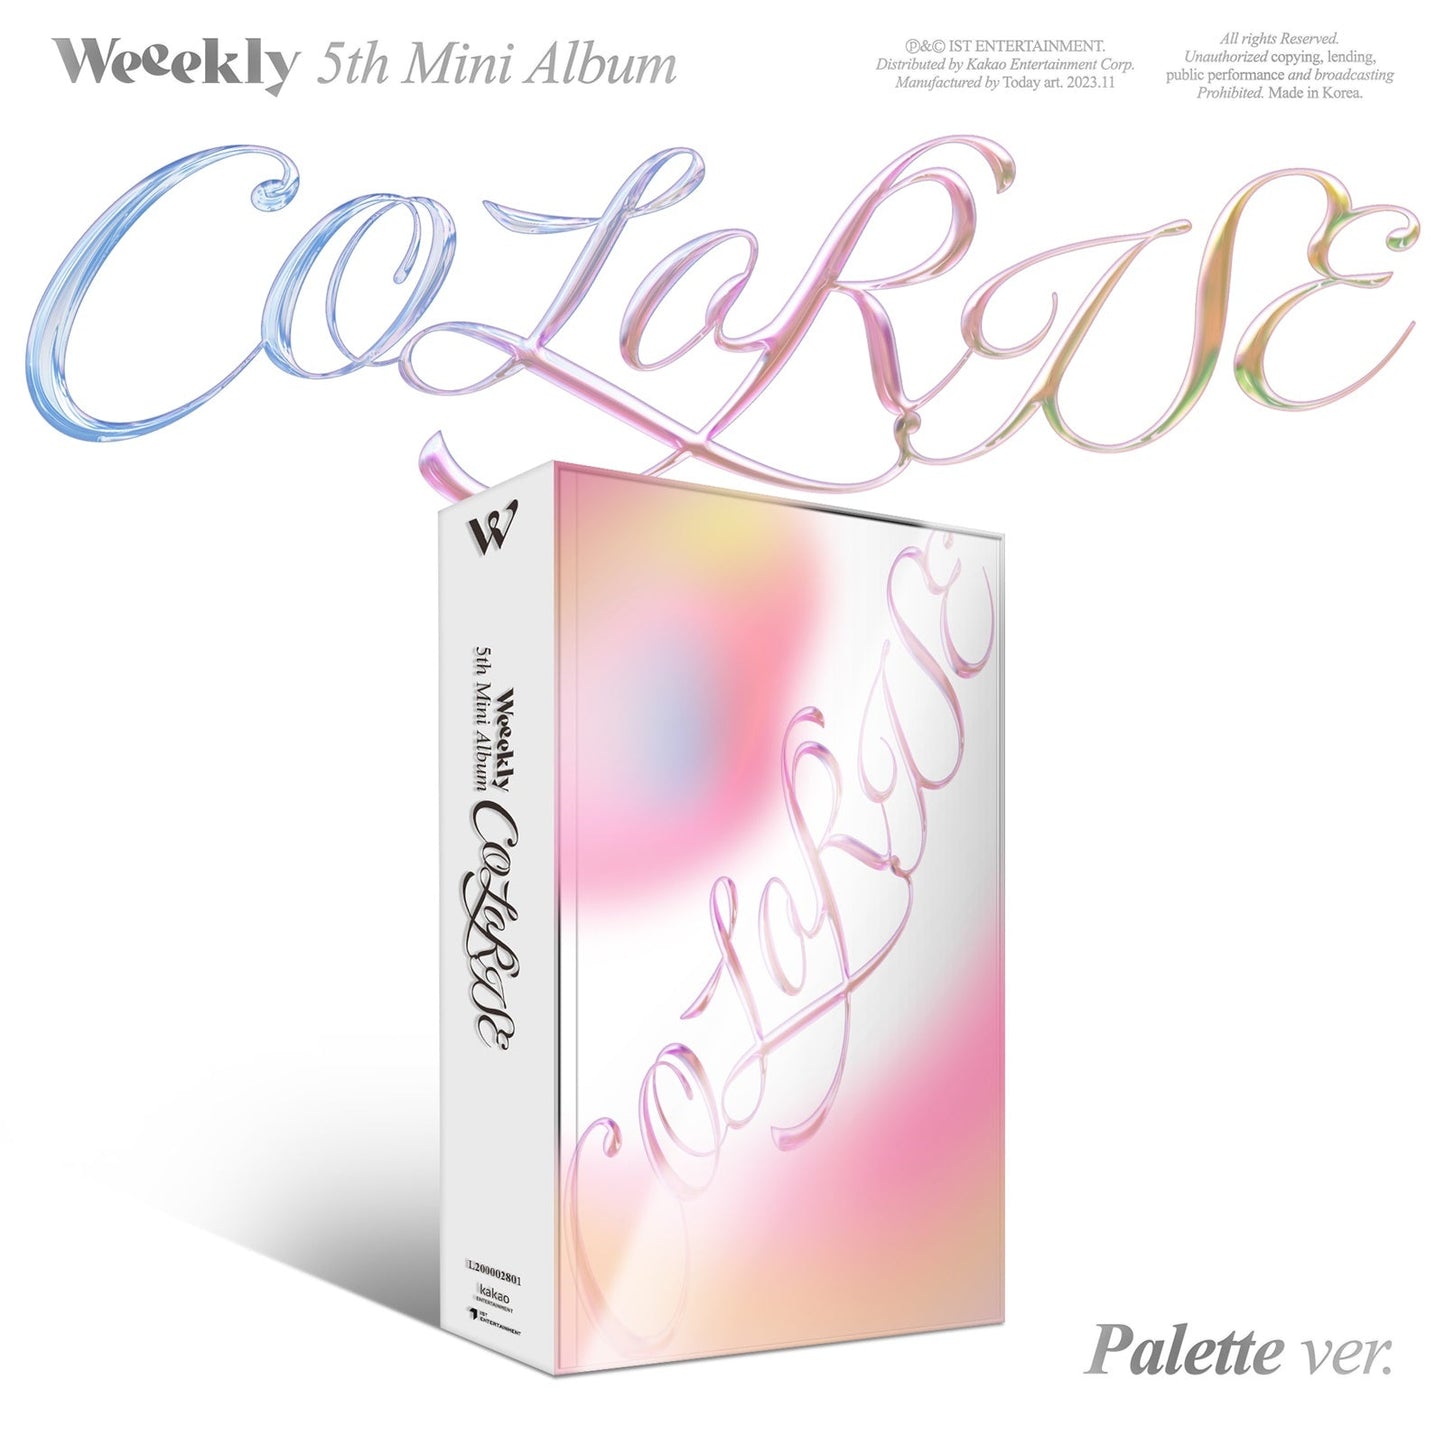 WEEEKLY 5TH MINI ALBUM 'COLORISE' PALETTE VERSION COVER